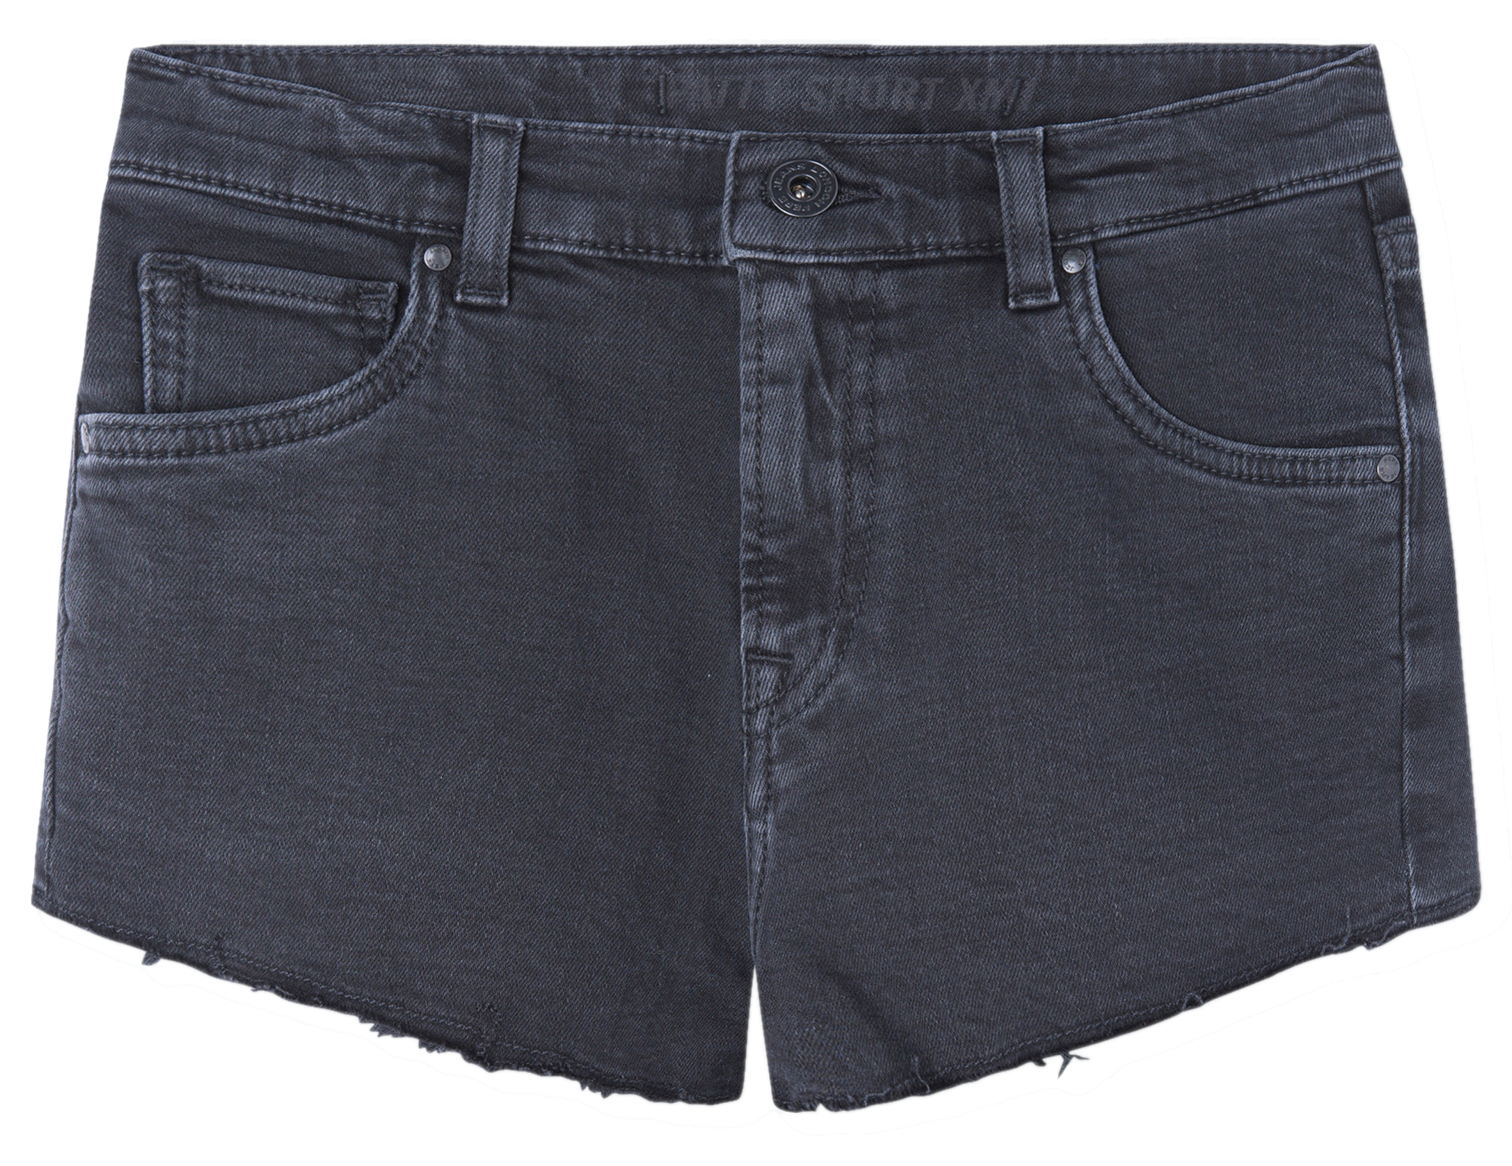 Pantalones Niña Jeans Pepe Jeans London - Pg201667 - PG201667.6, pepe jeans  niña